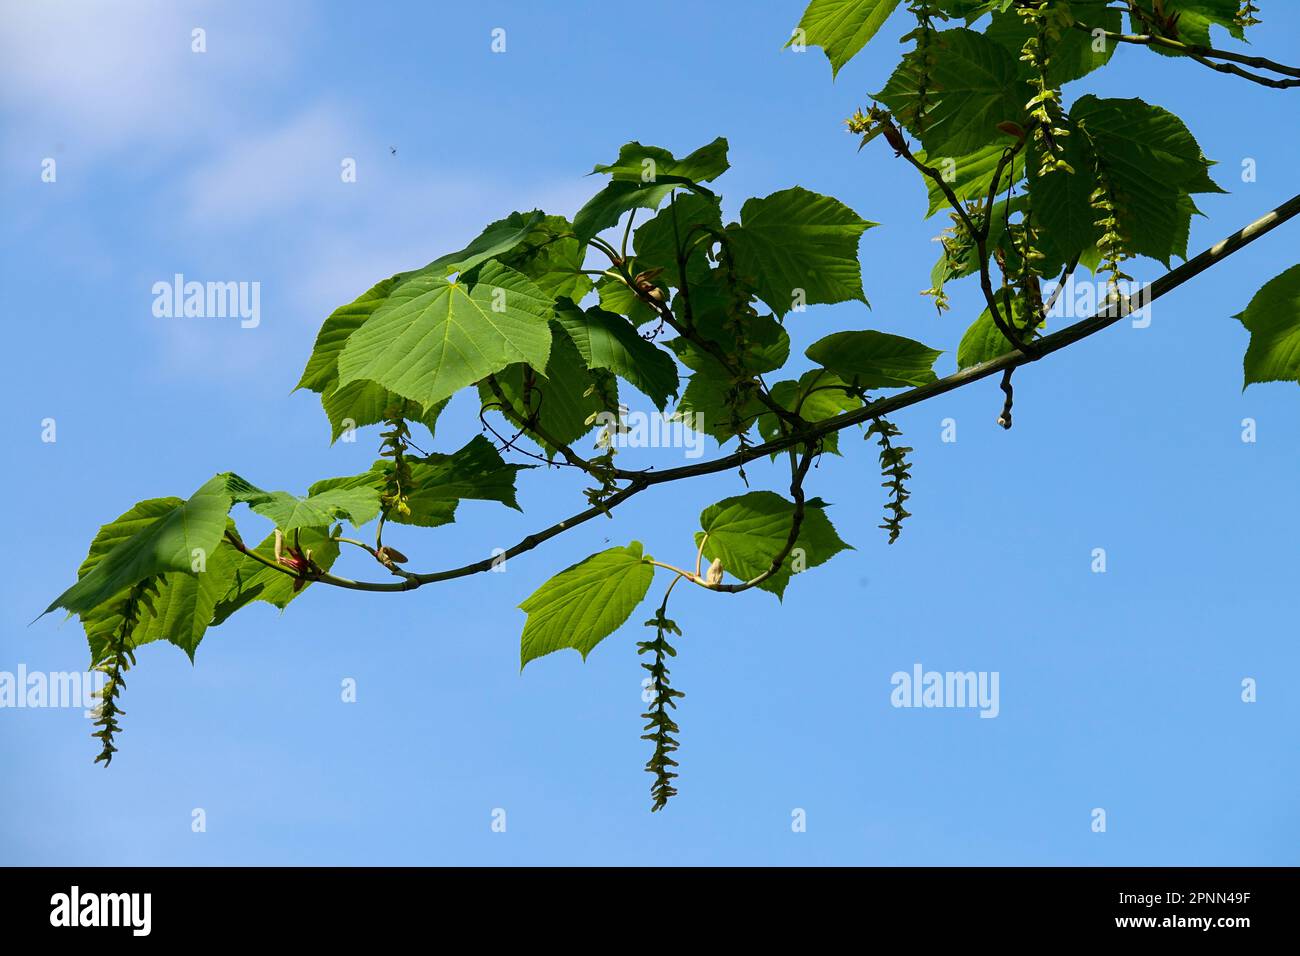 Acer tegmentosum, Spring blooms on branch Stock Photo